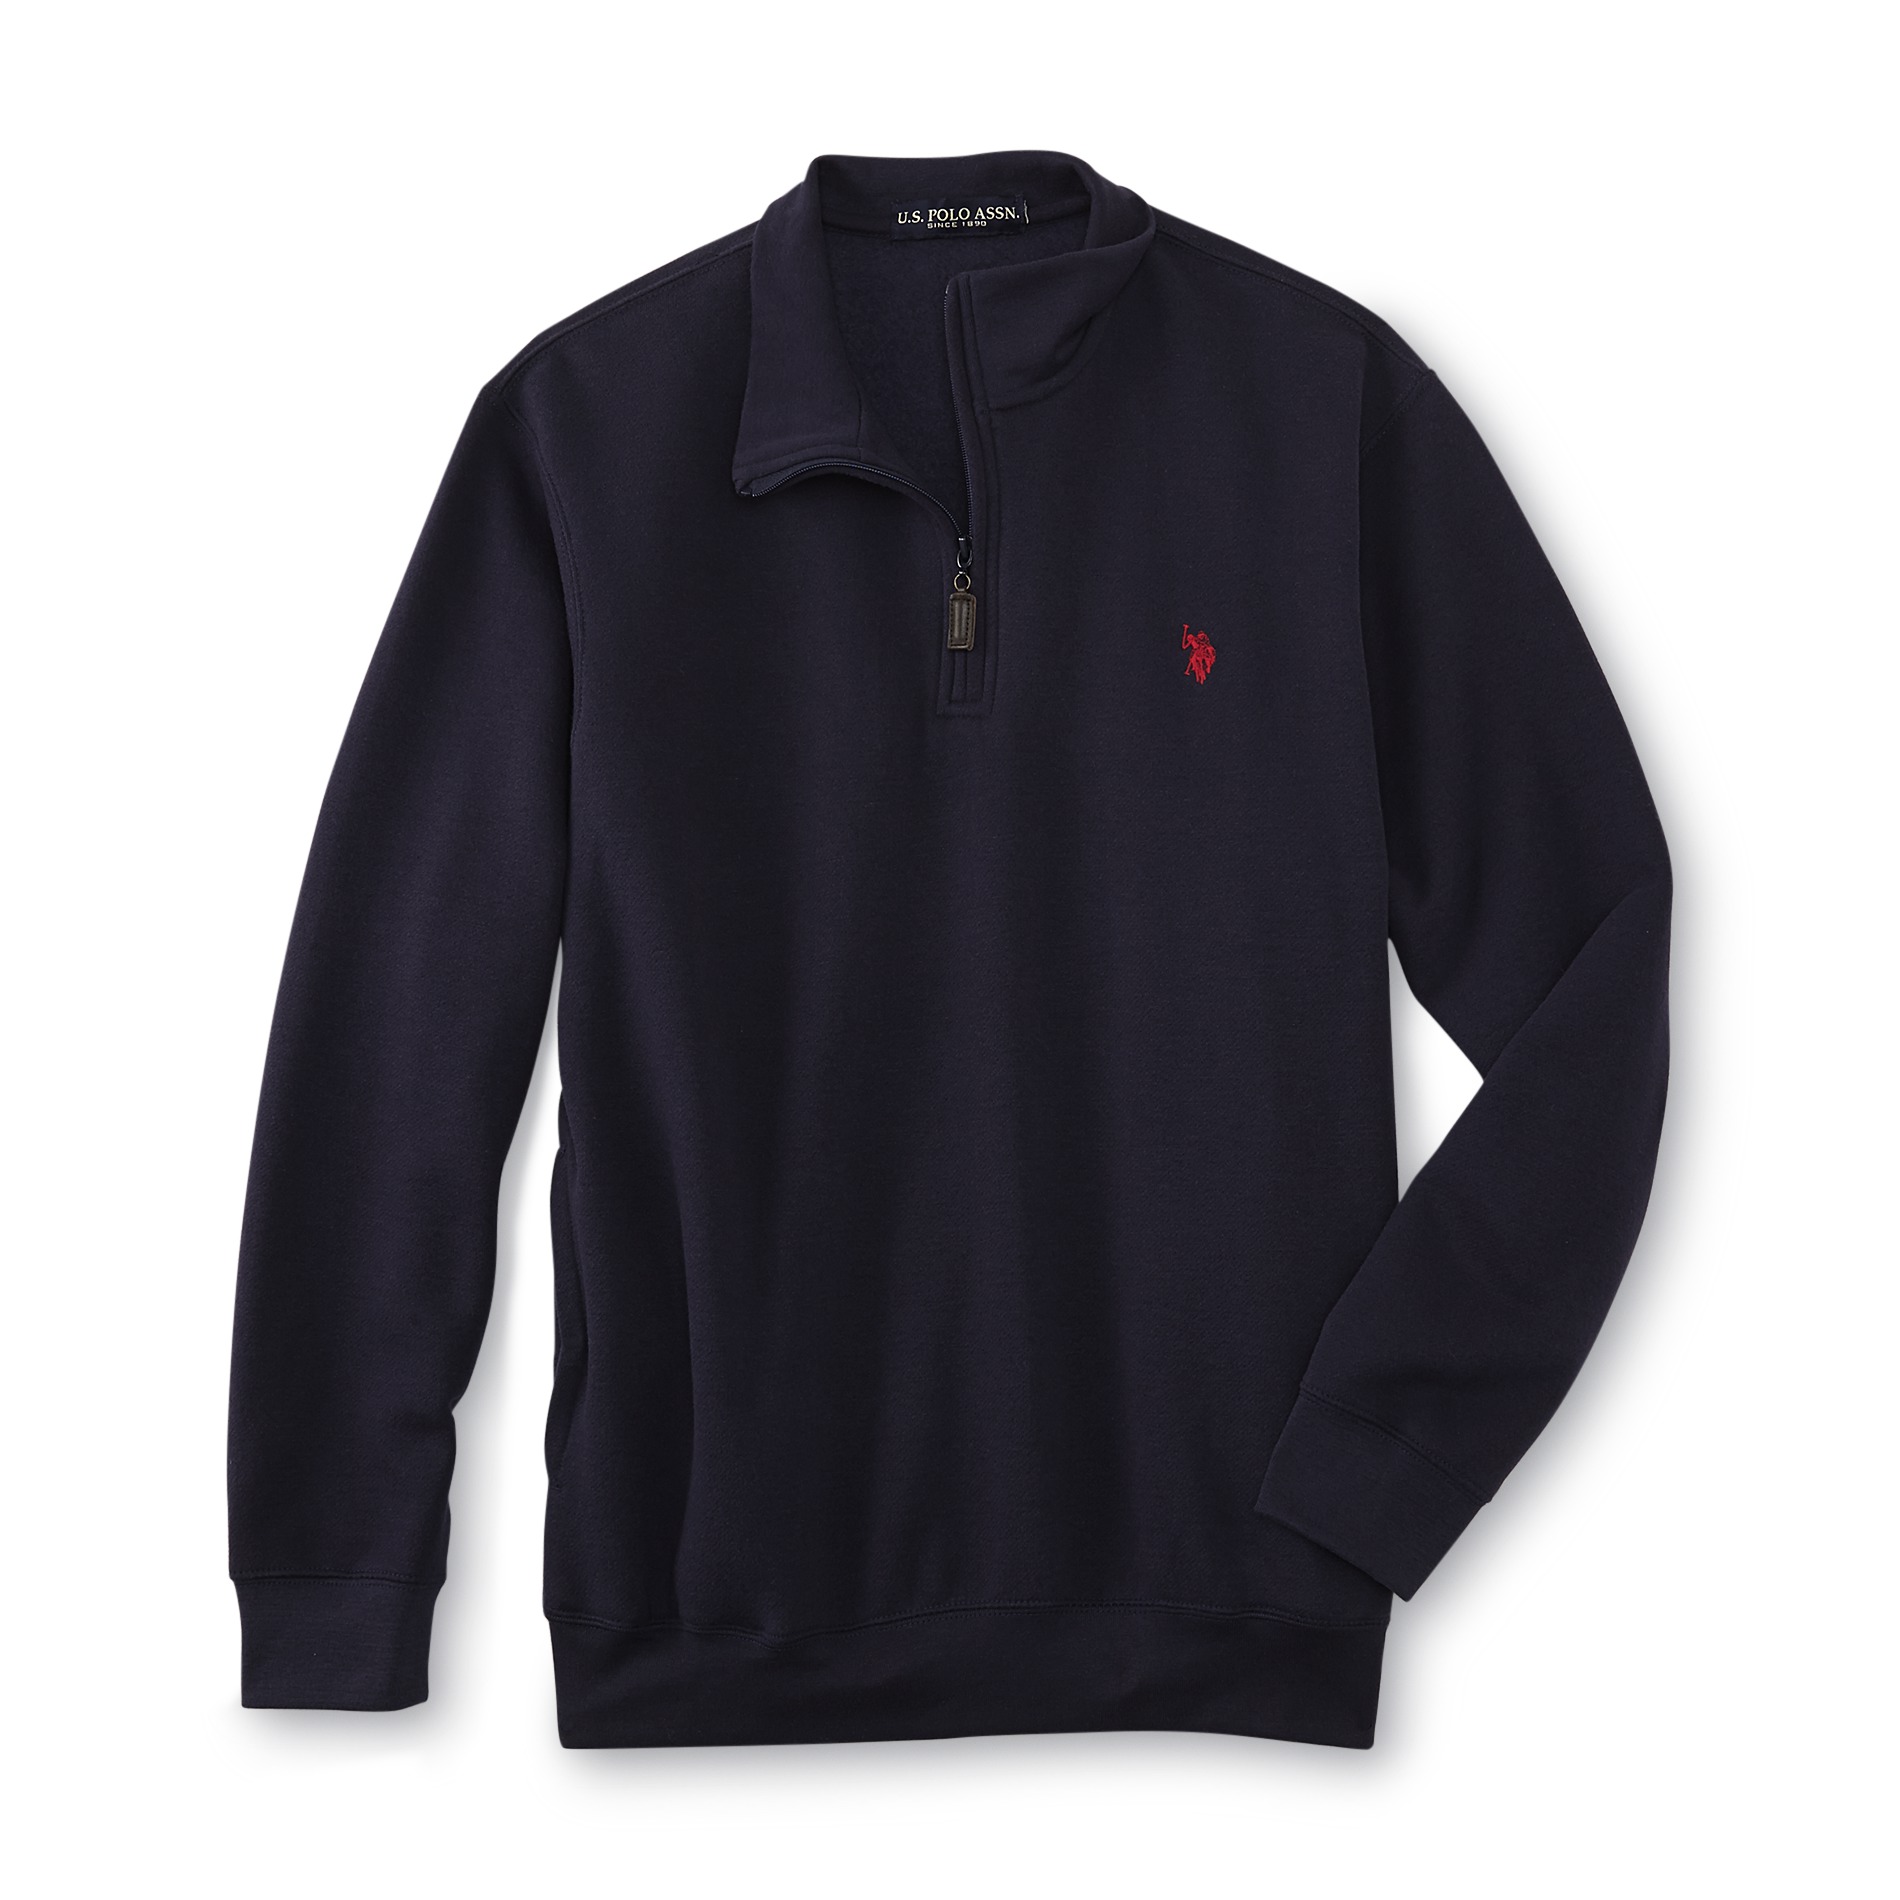 U.S. Polo Assn. Men's Quarter-Zip Sweatshirt